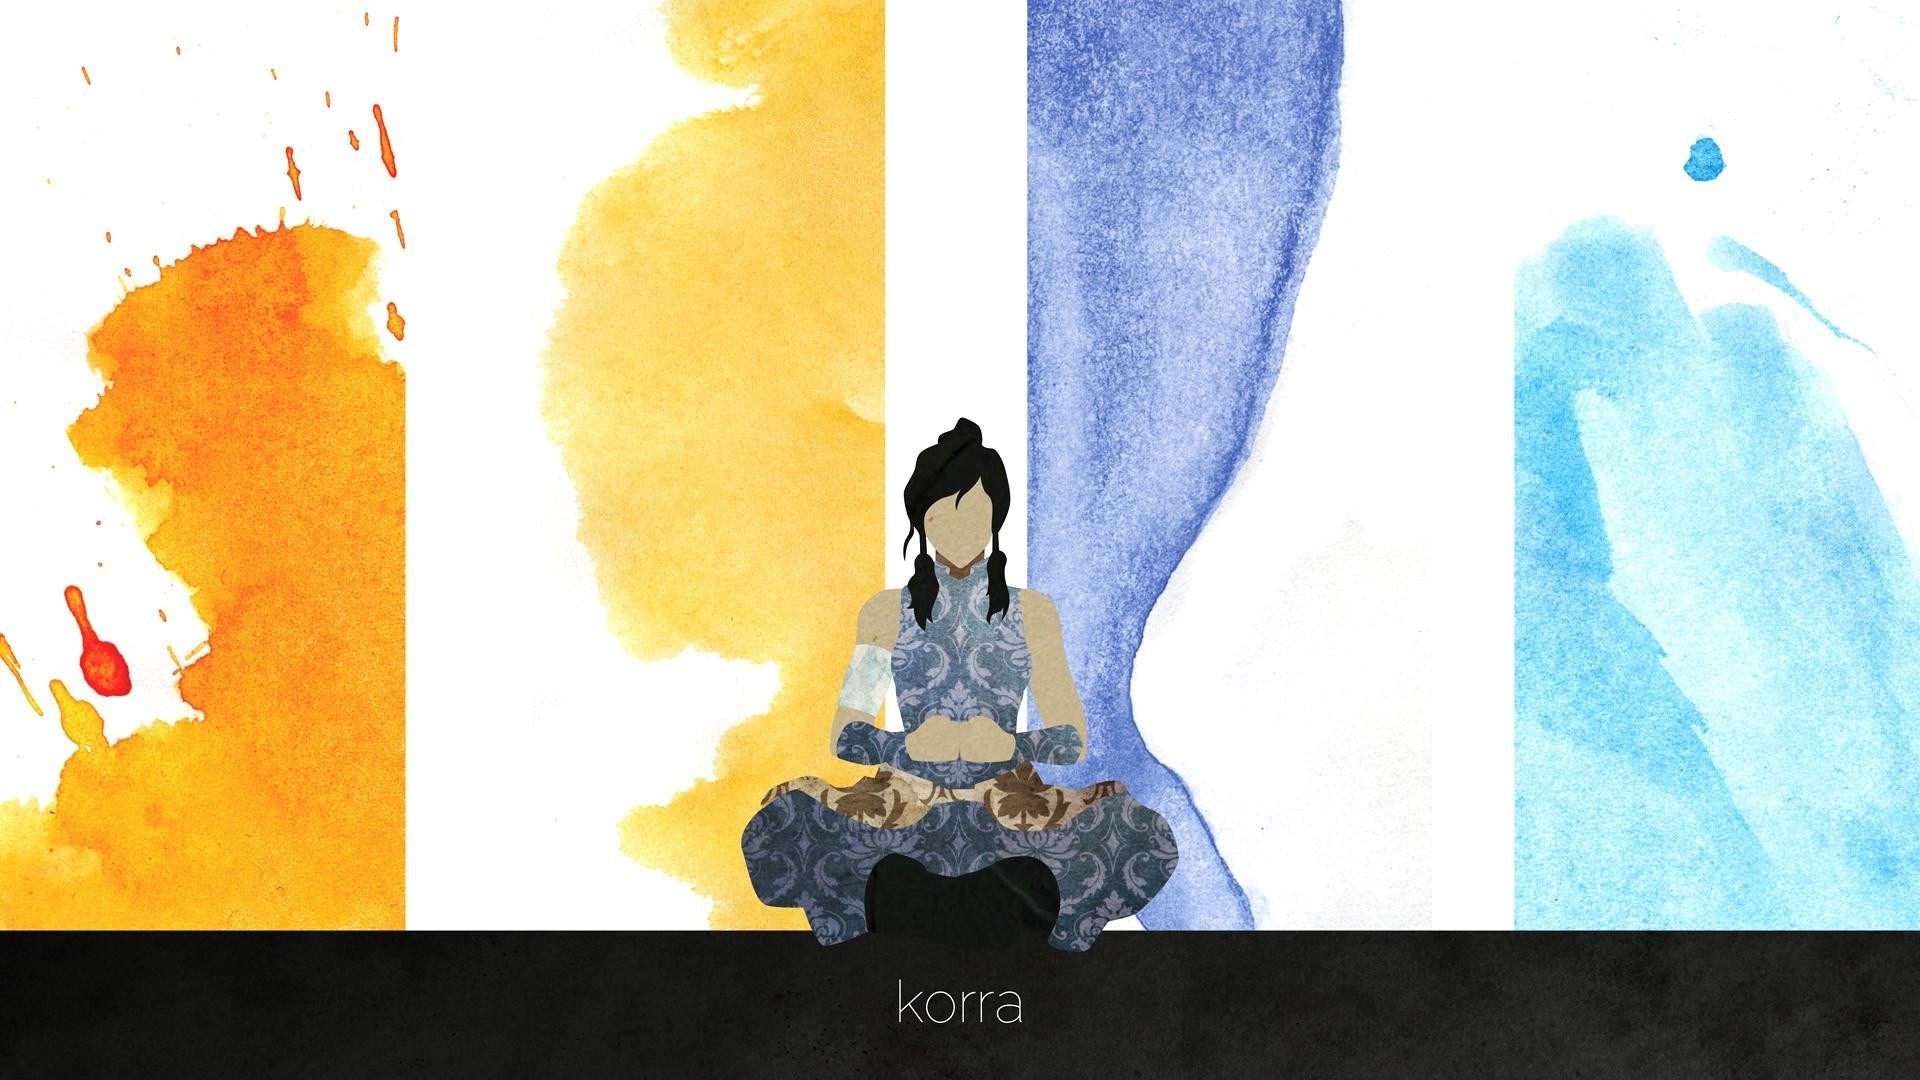 Background High Resolution: avatar the legend of korra